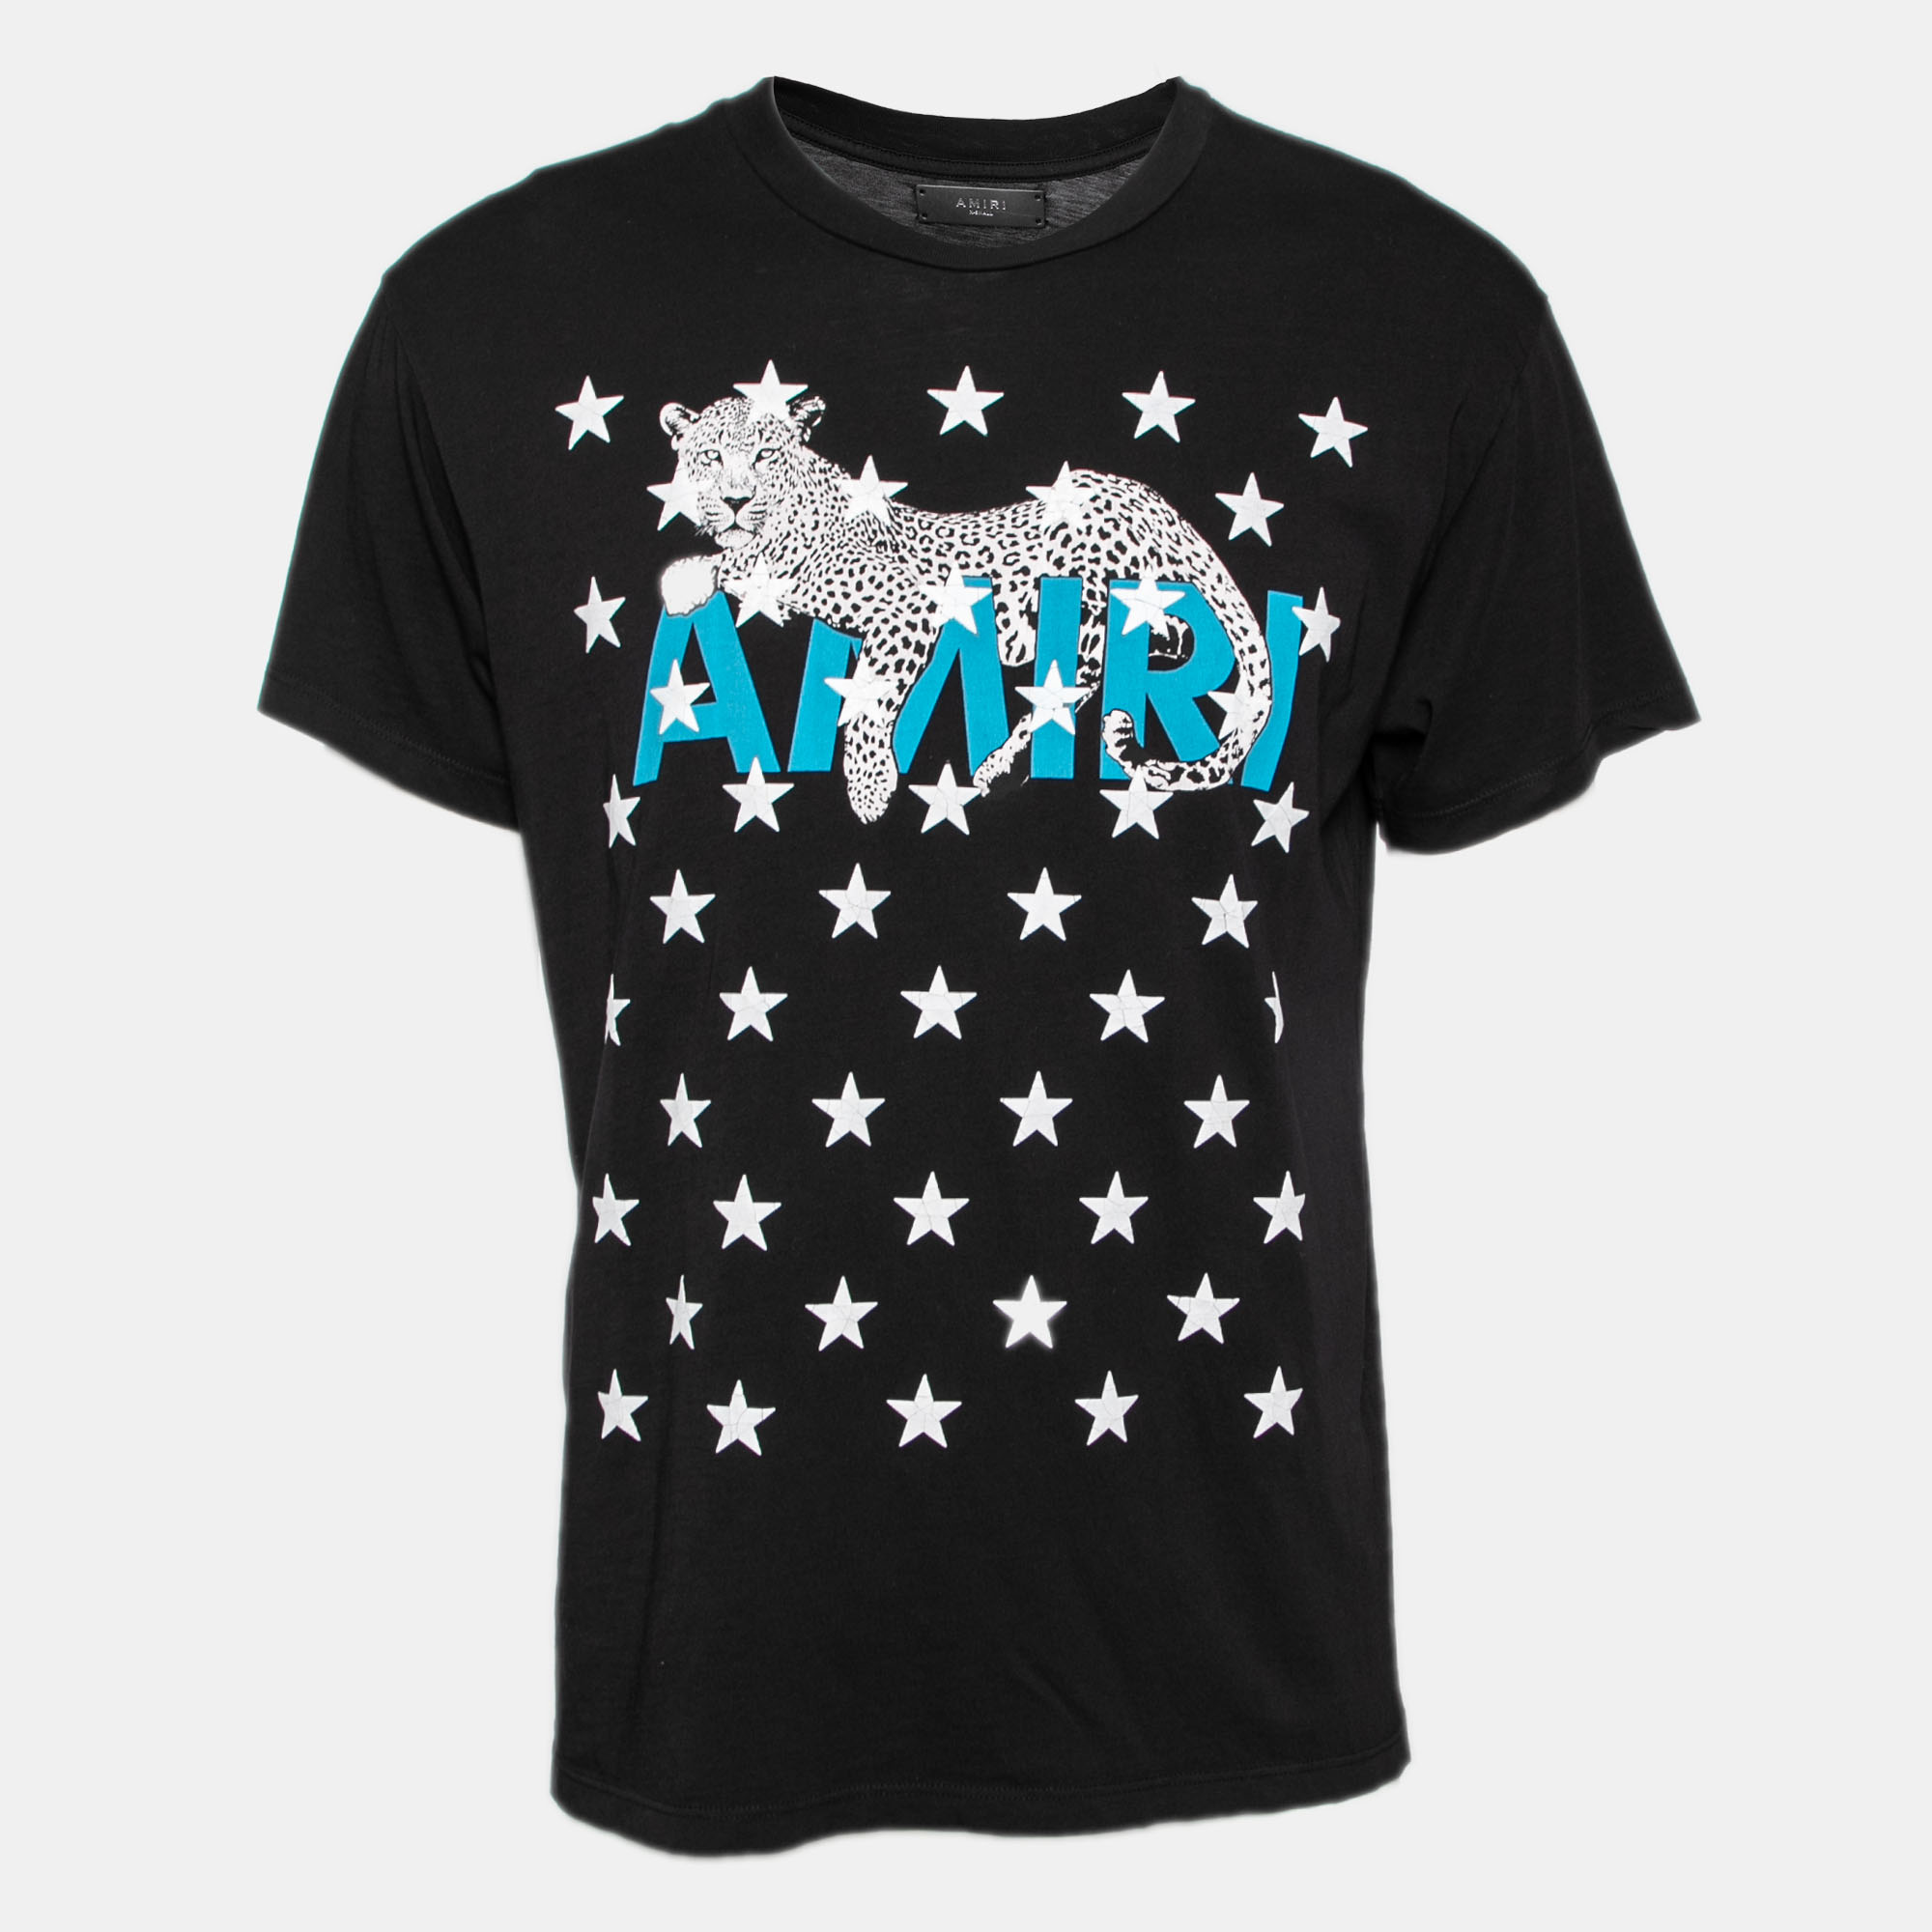 Amiri black cotton leopard star printed crew neck t-shirt xs